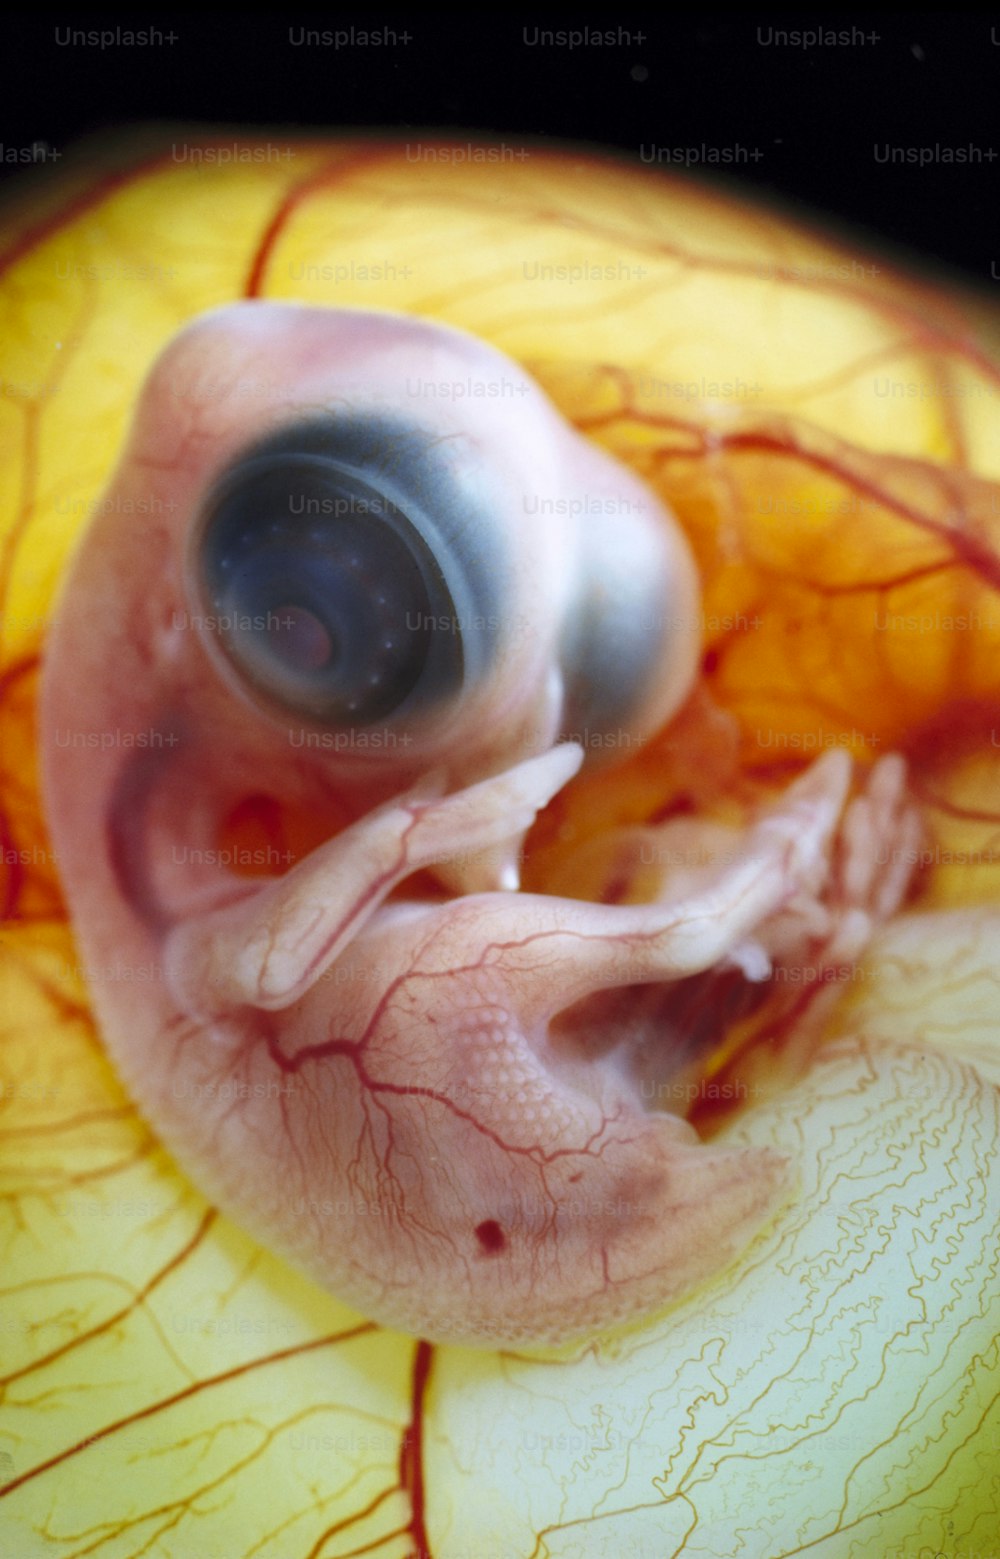 a close up of a human eye with an eyeball